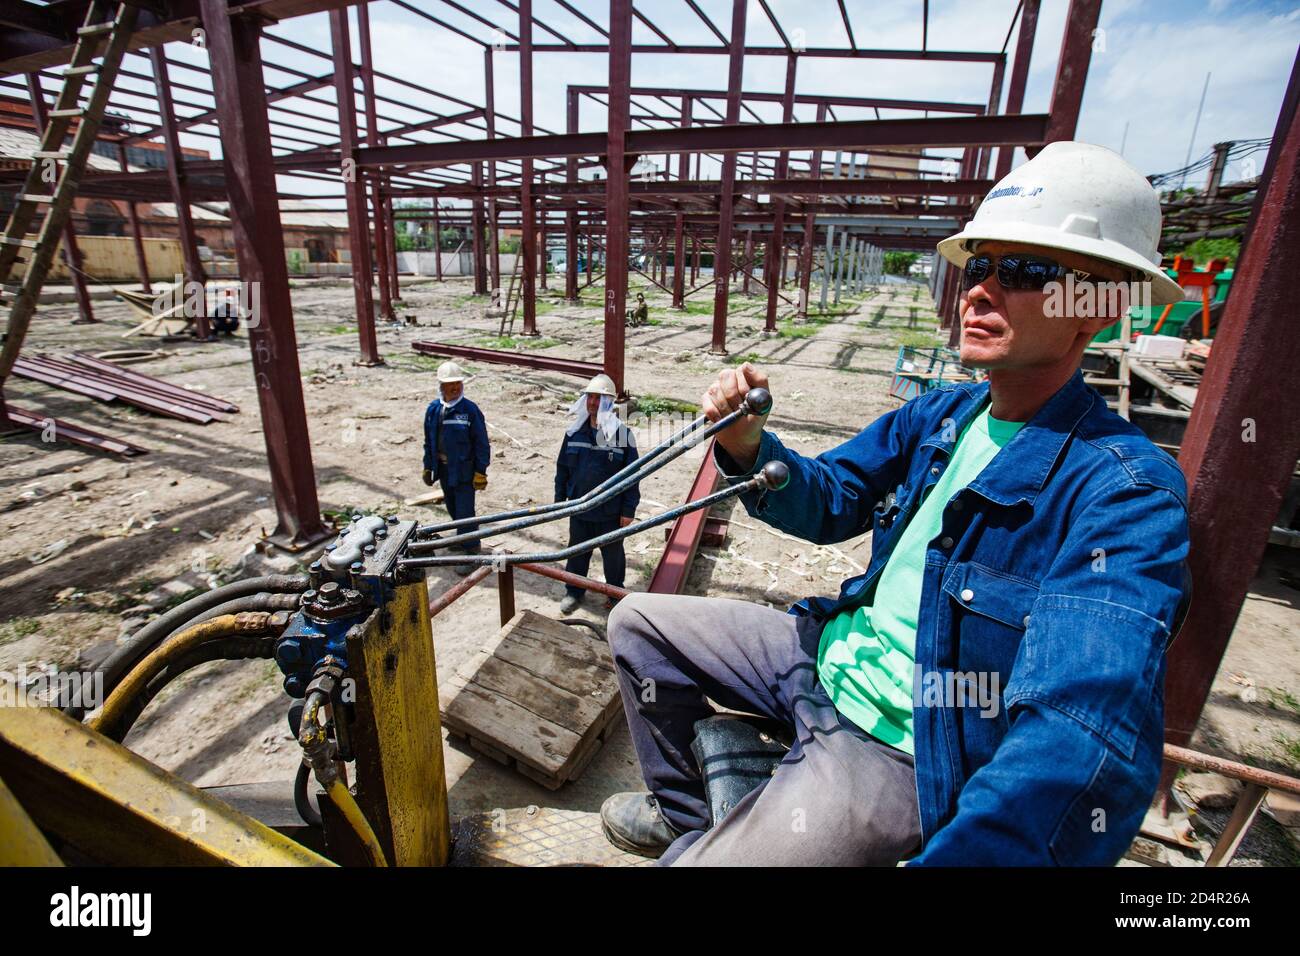 Shymkent/Kazakhstan - April 27 2012: Construction of new industrial building. Crane operator at work. Stock Photo